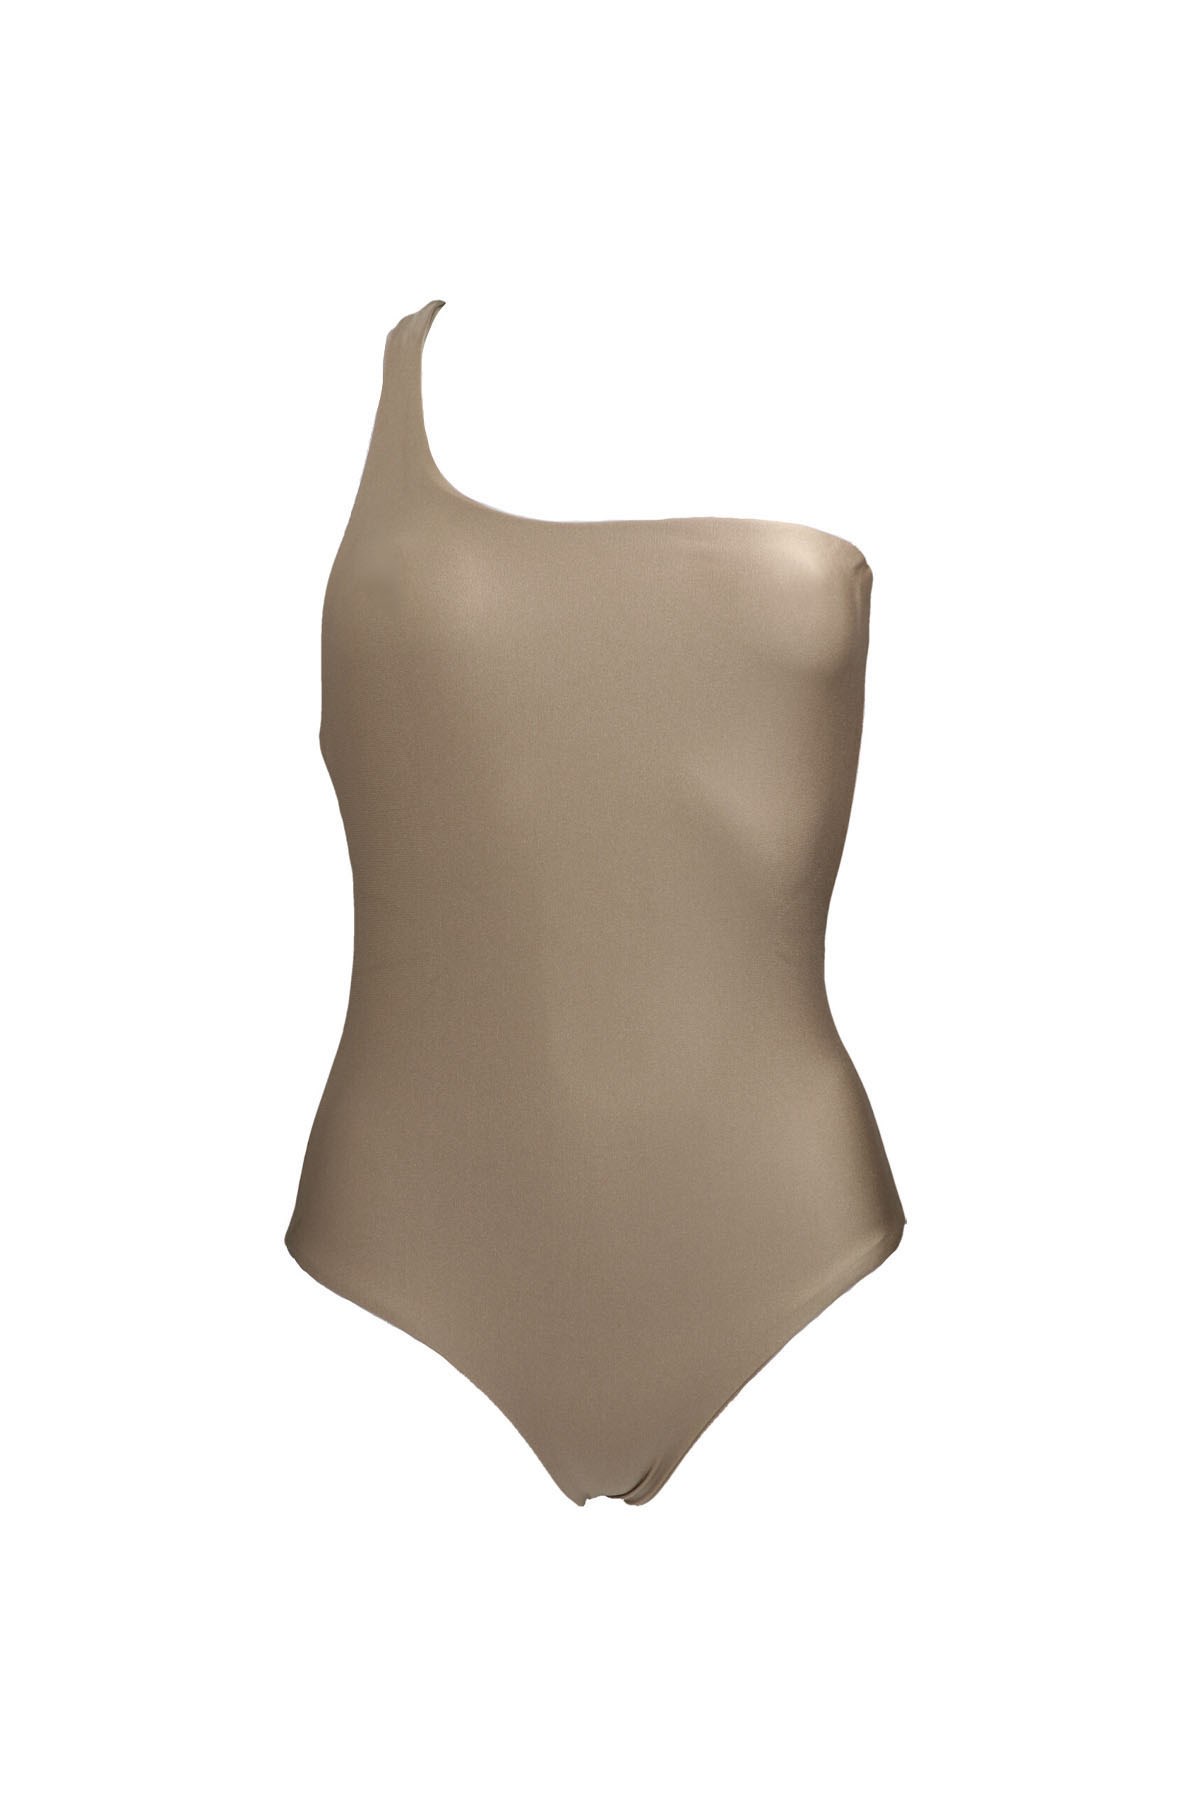 JADE SWIM 
‘Evolve’ One-Piece Swimsuit